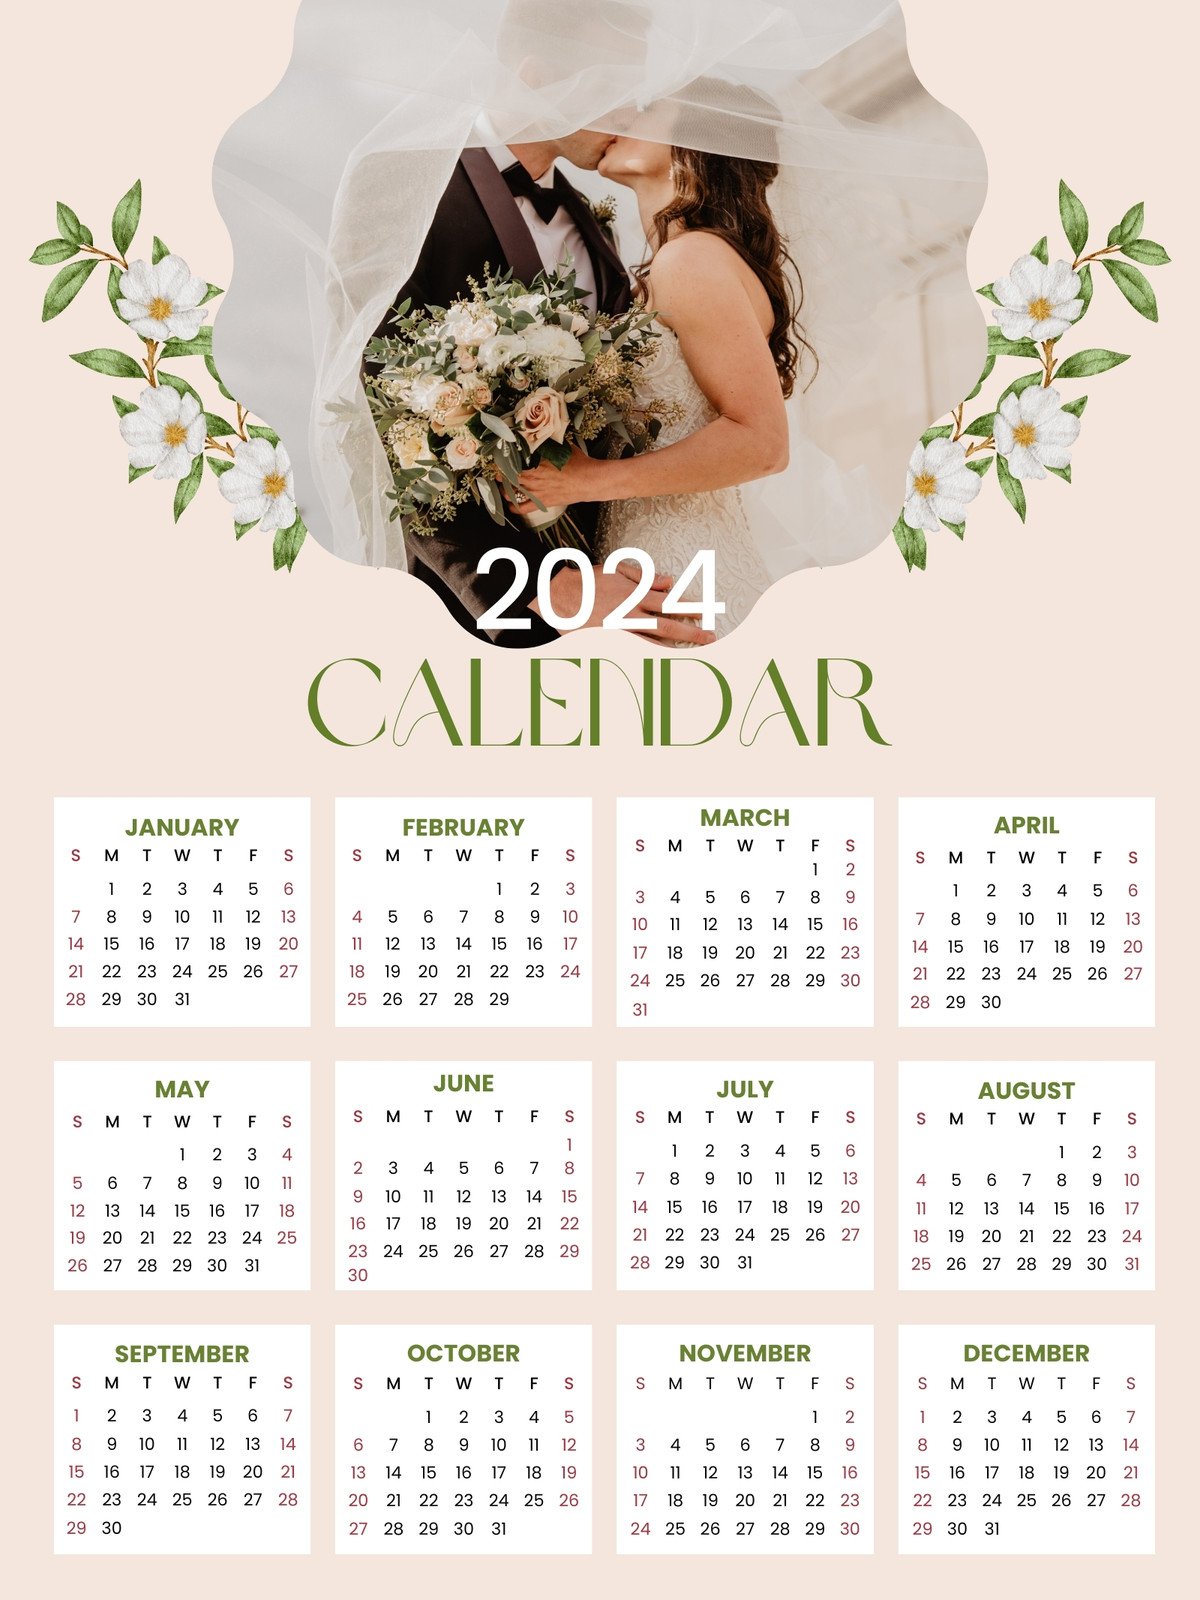 Free, printable, customizable photo calendar templates